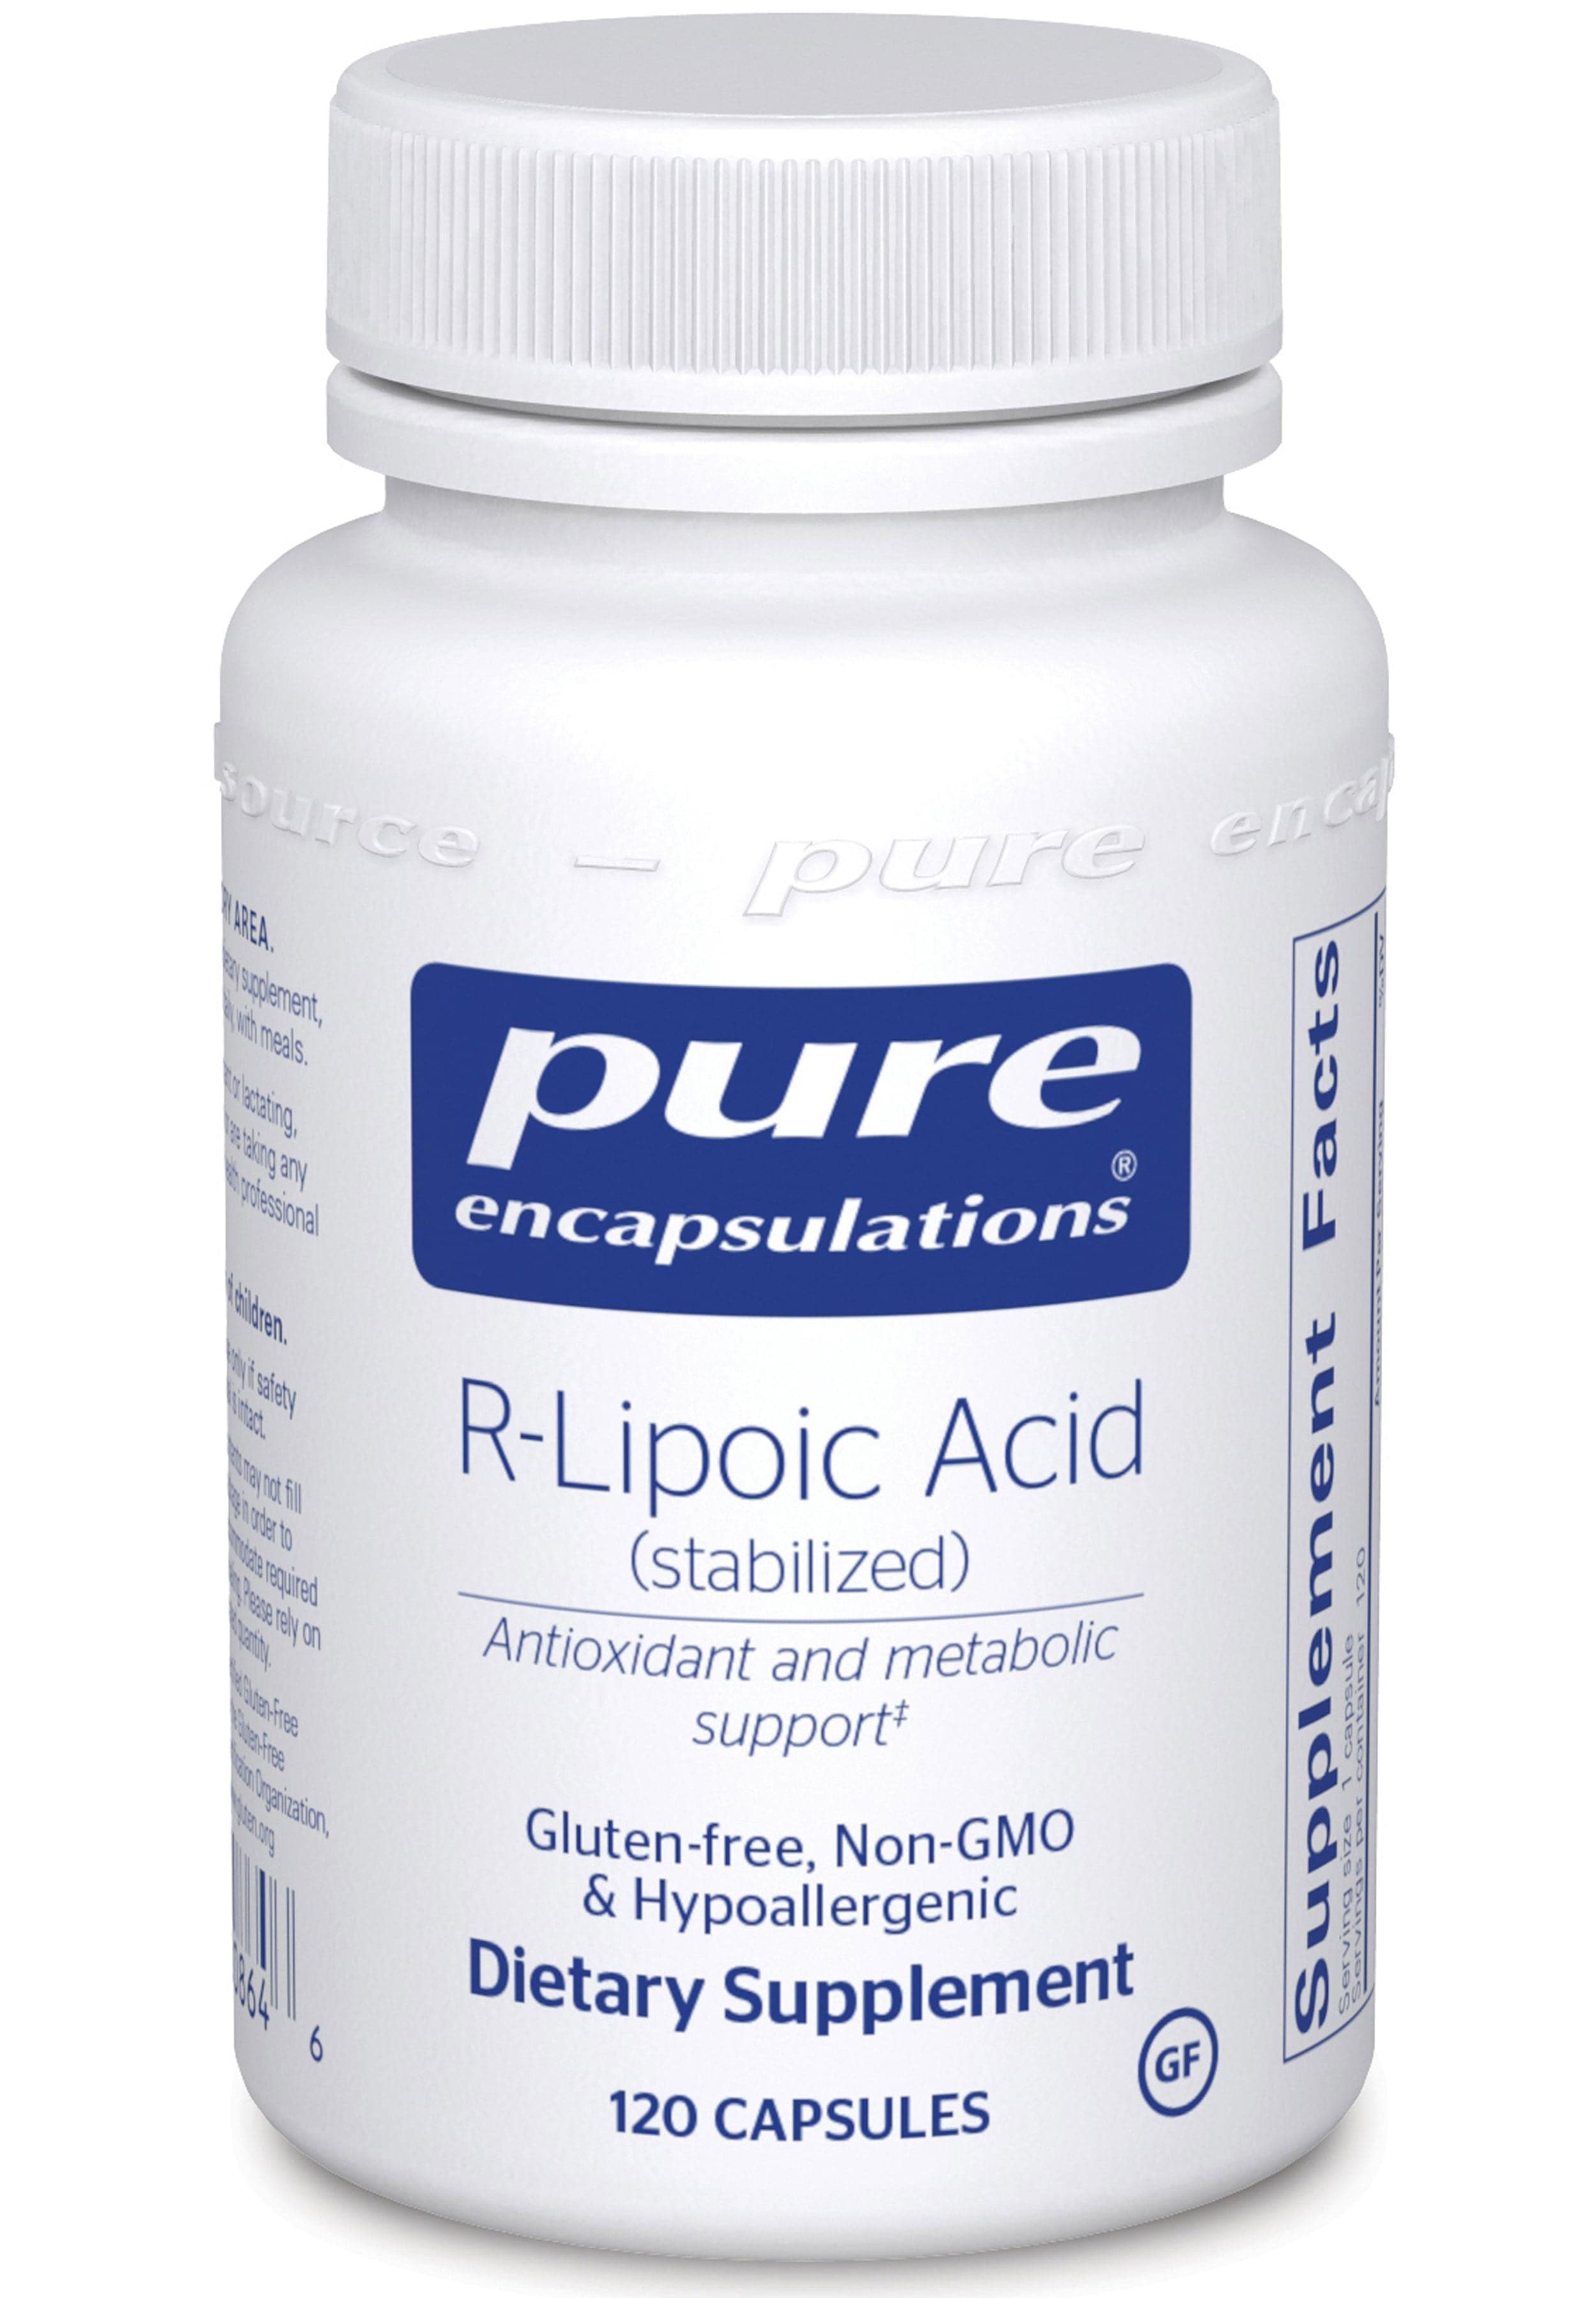 Pure Encapsulations R-Lipoic Acid (stabilized)